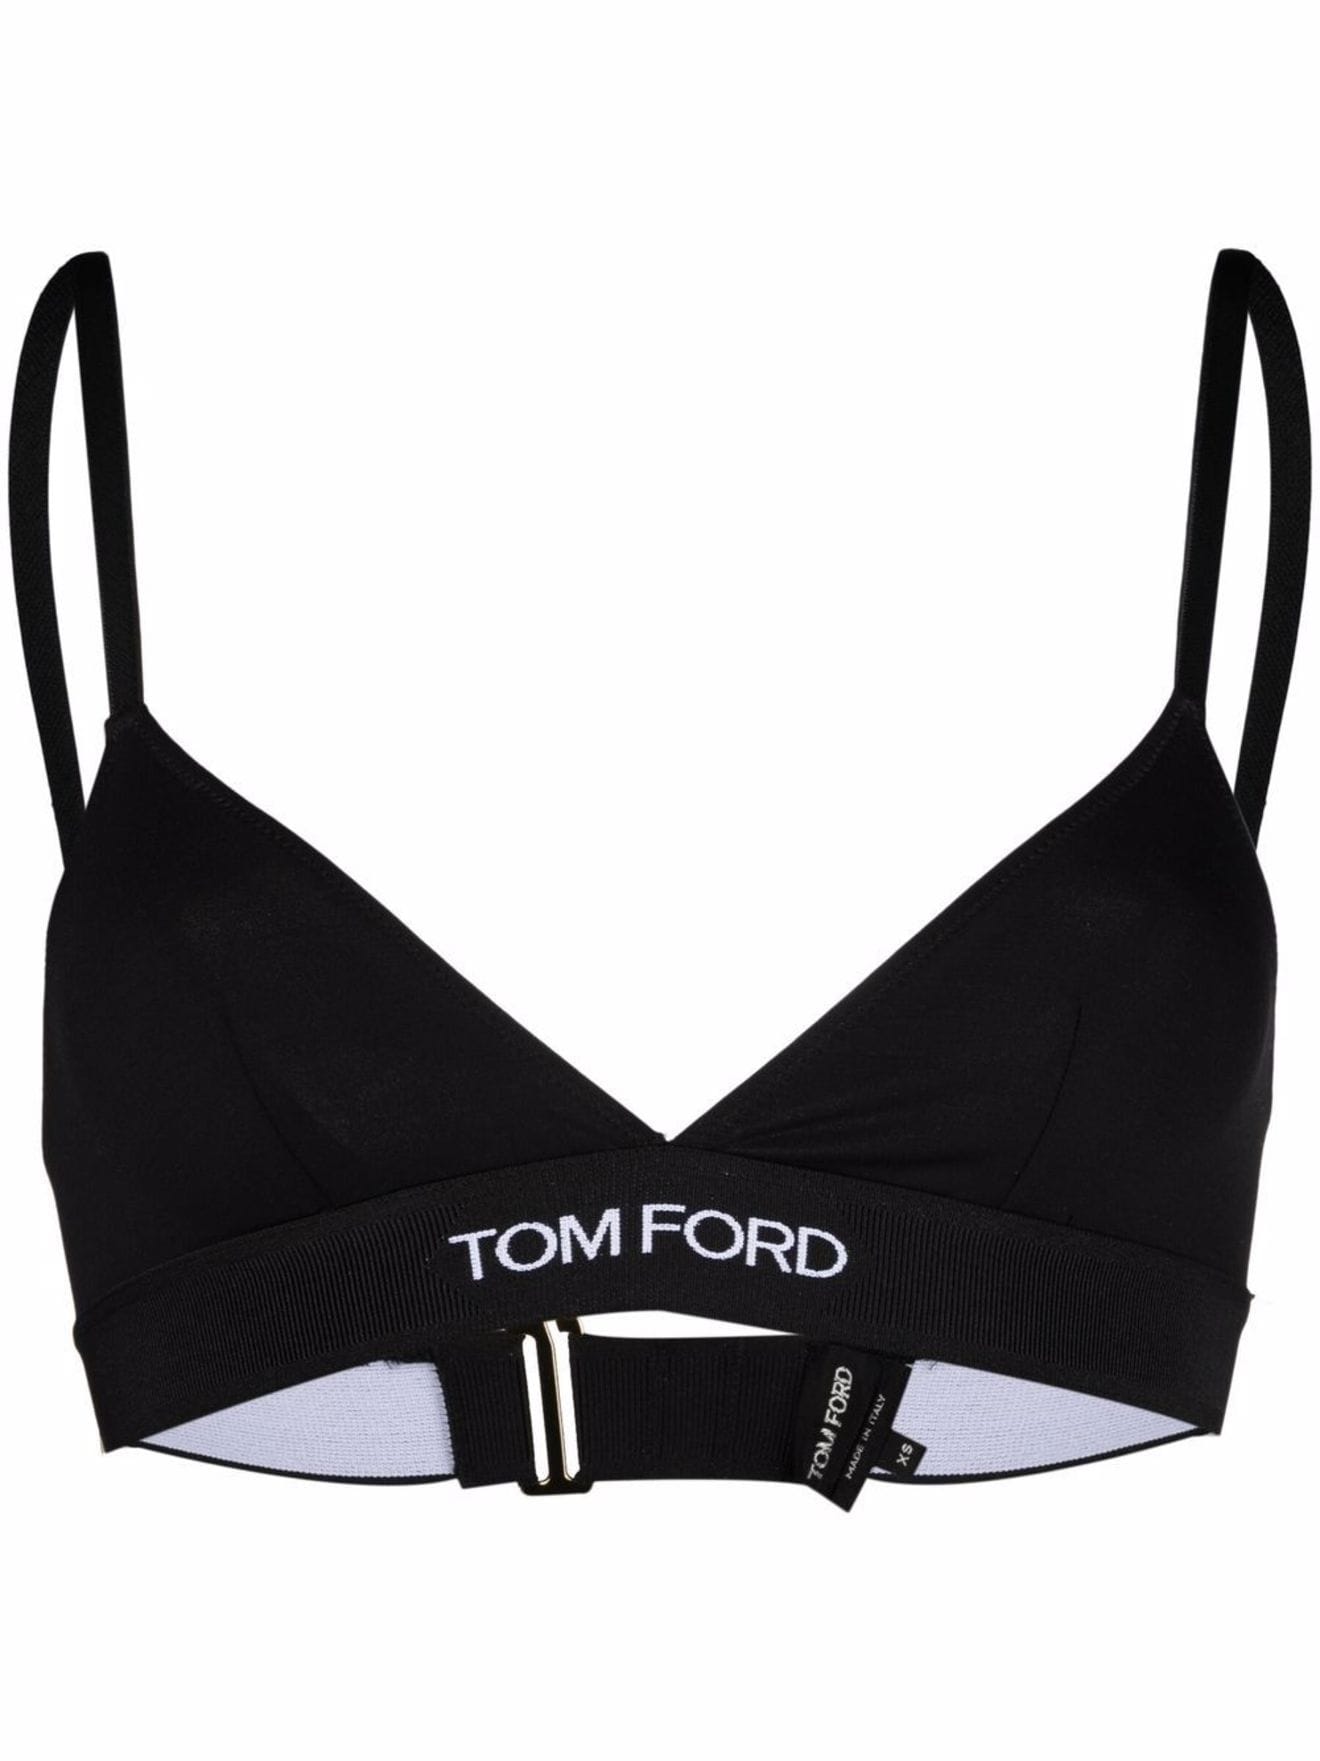 TOM FORD logo waistband bra black | MODES